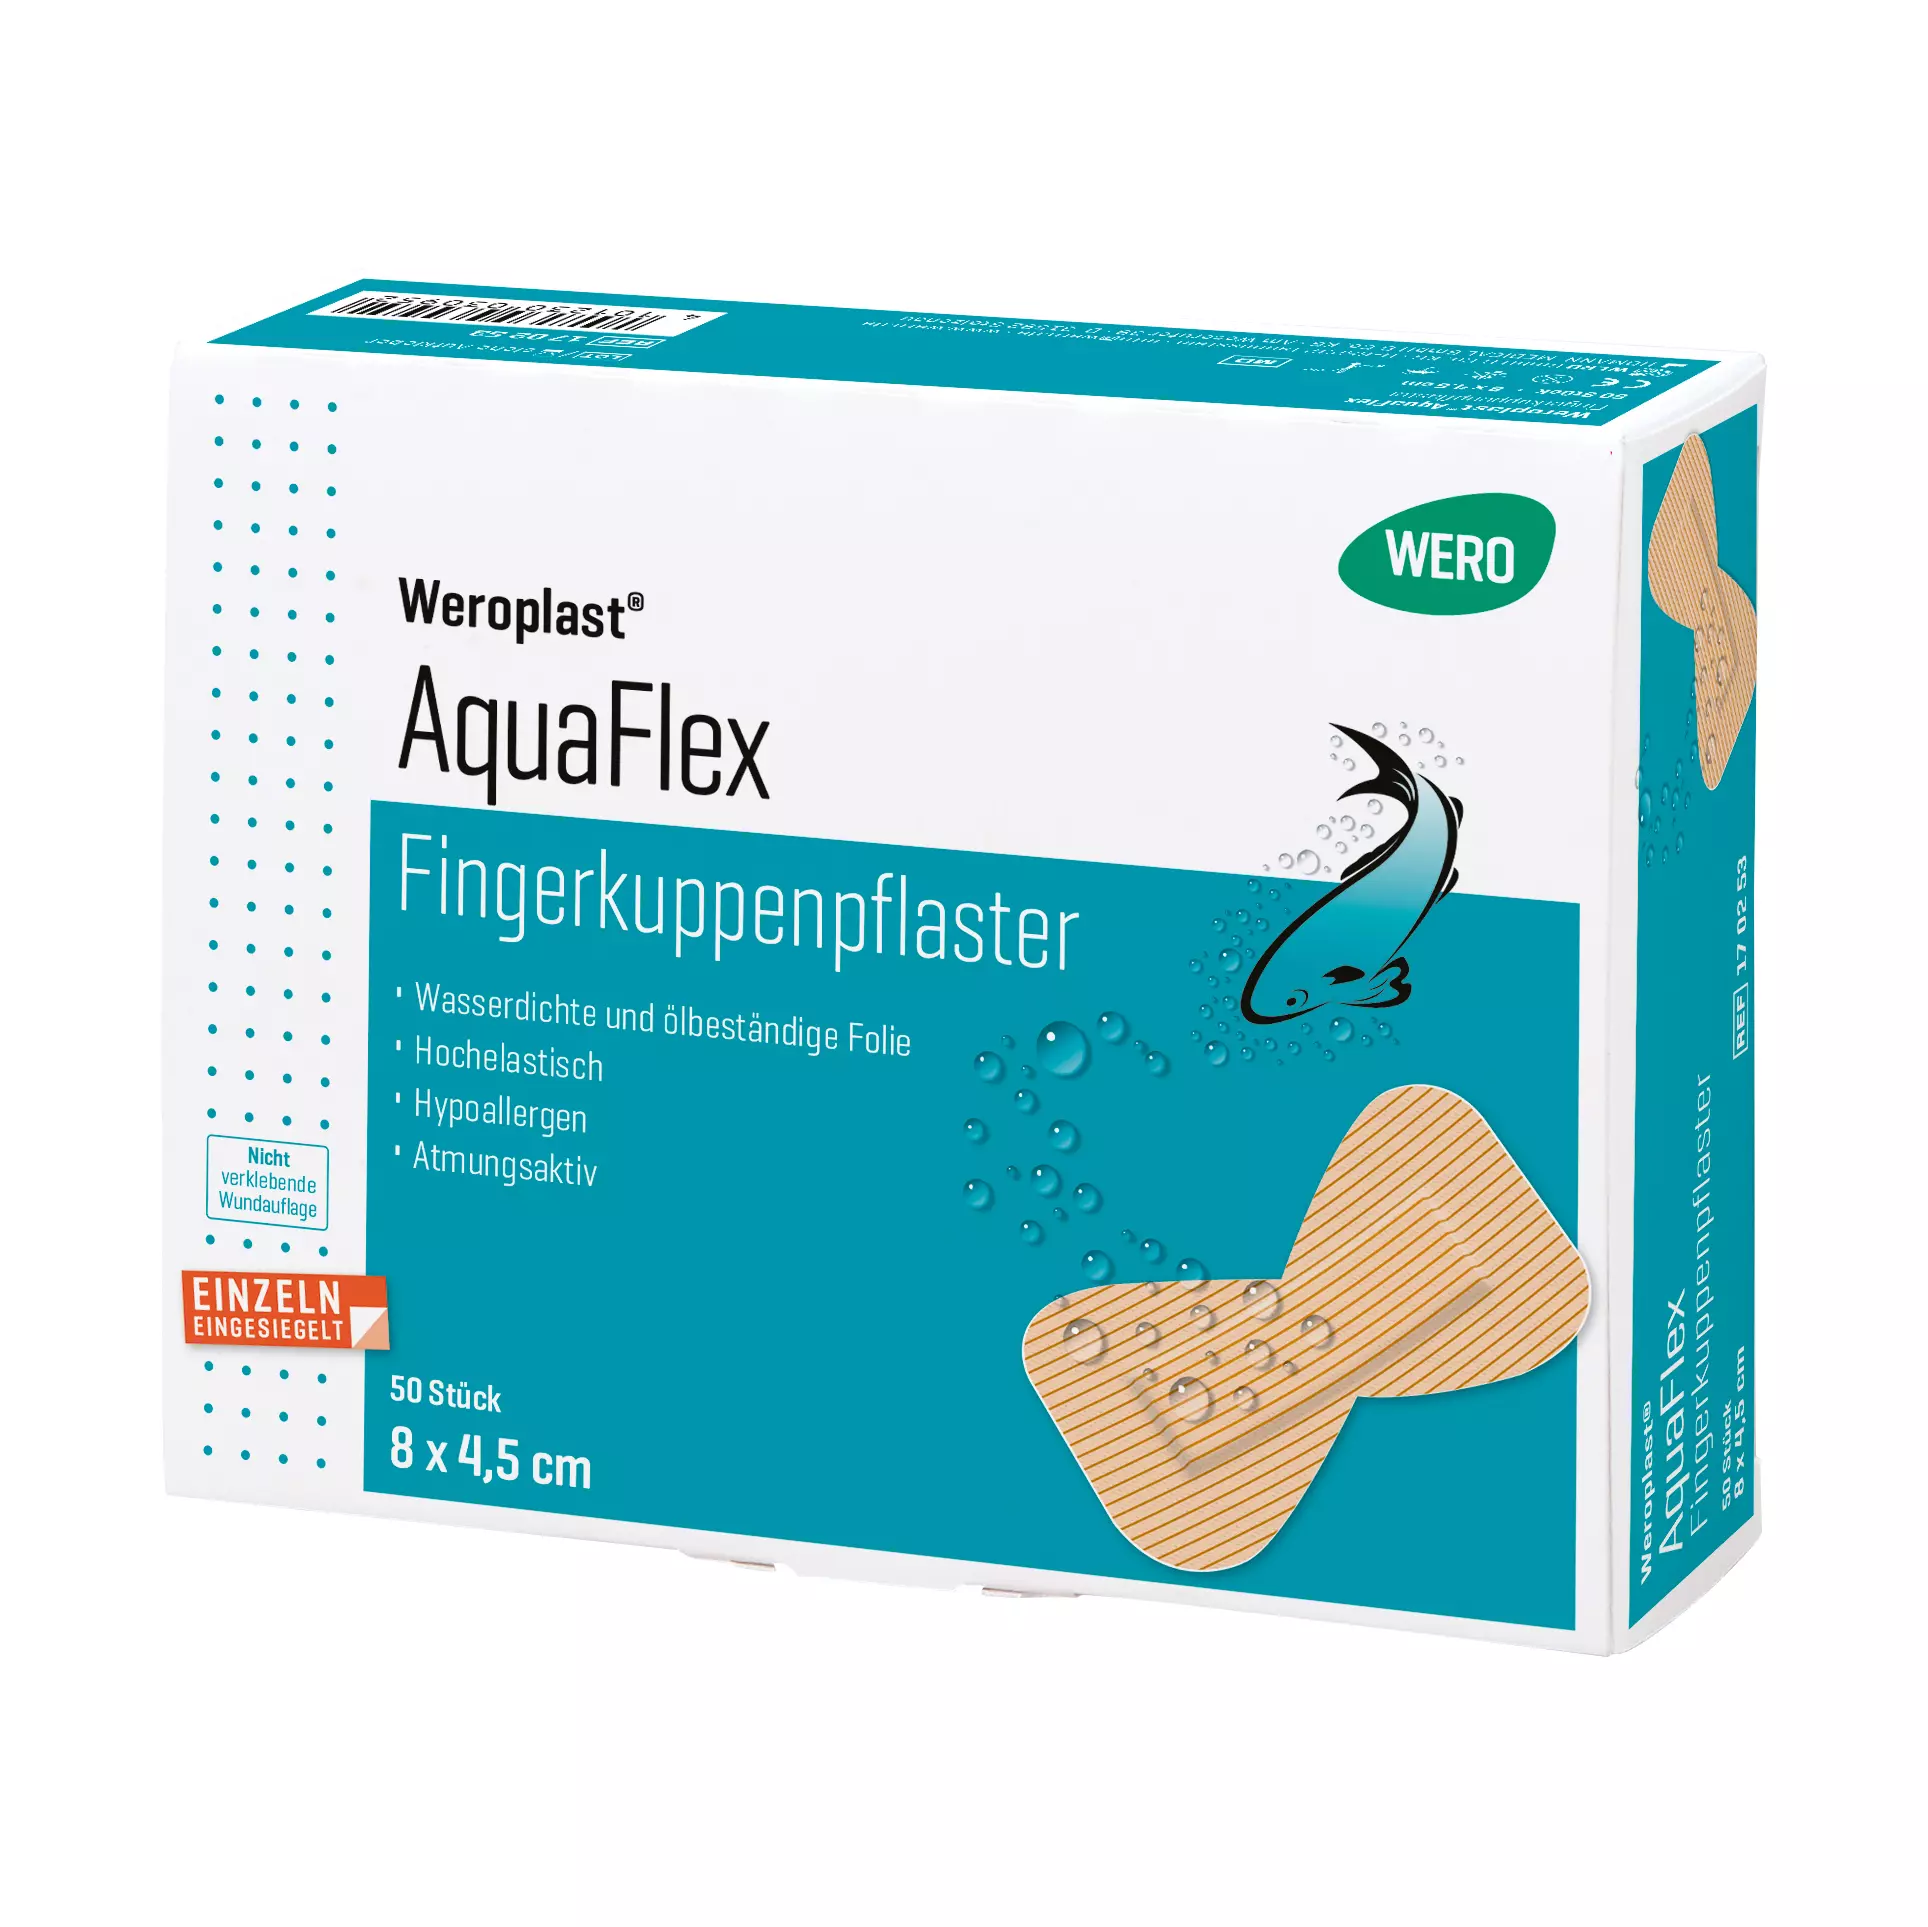 Fingerkuppenpflaster Weroplast® AquaFlex